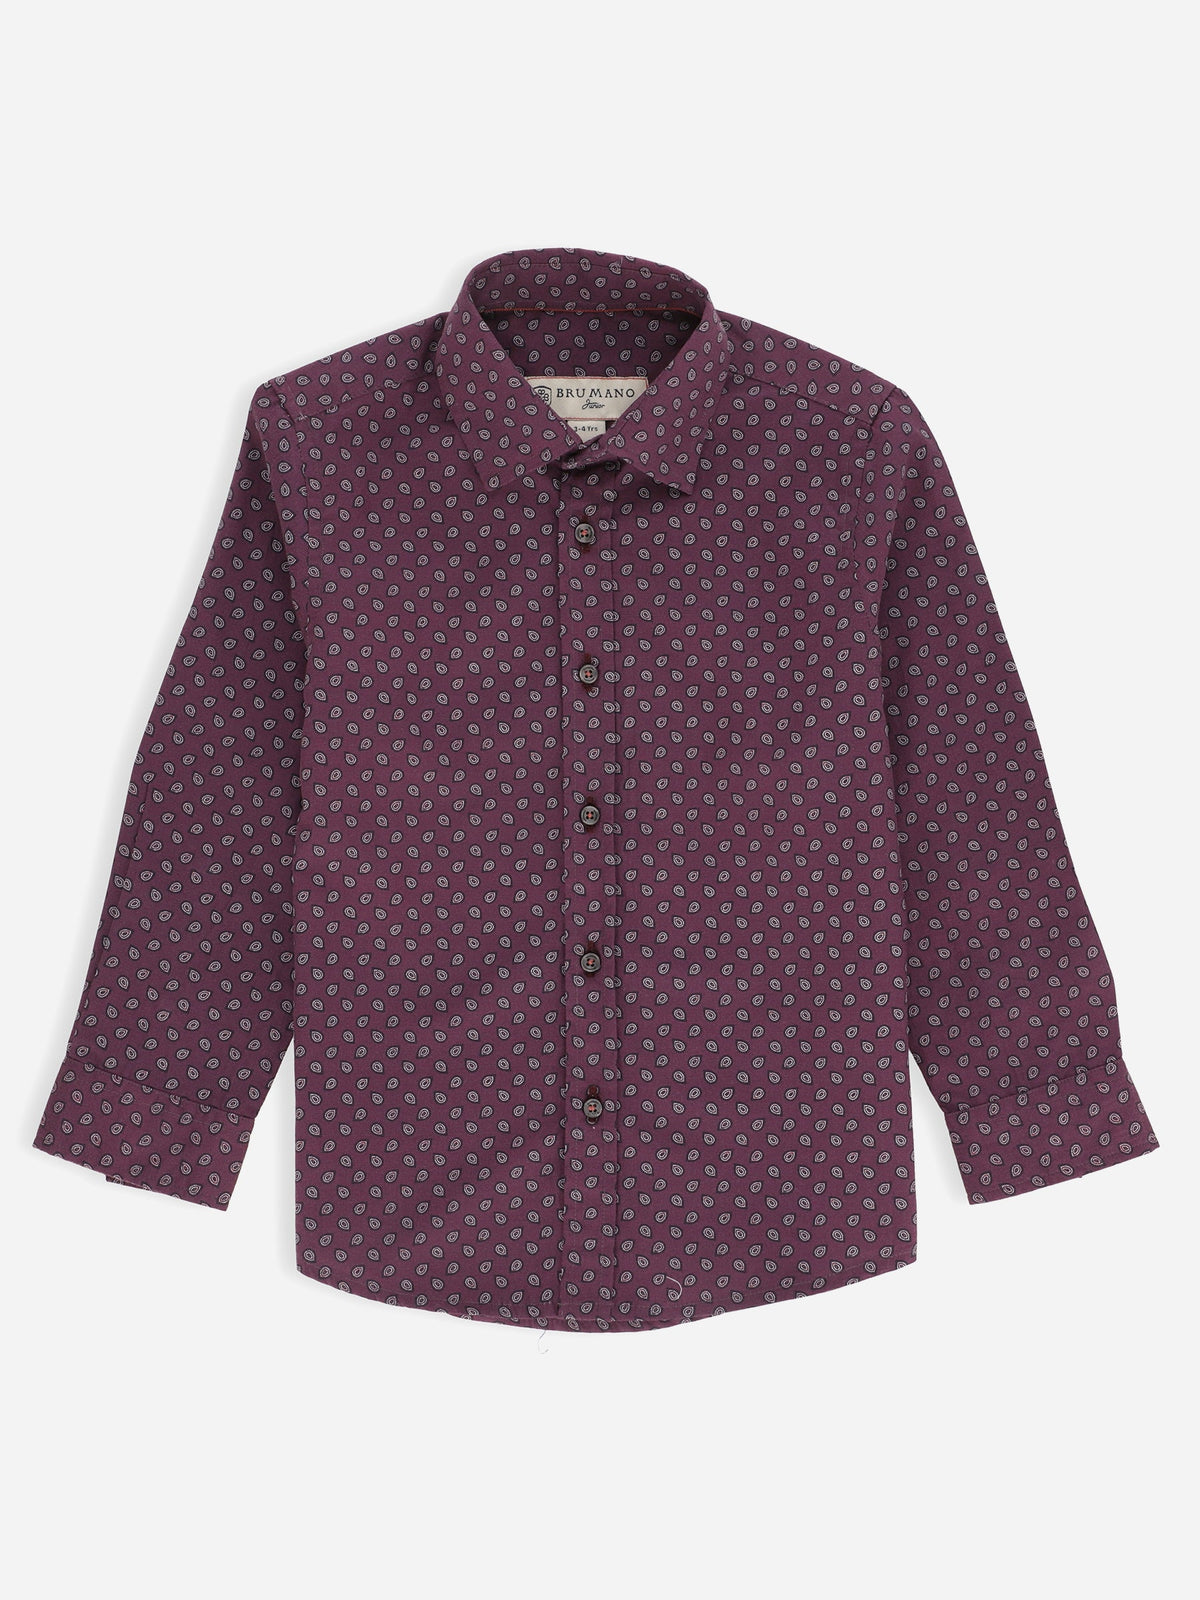 Purple Paisley Printed Long Sleeve Casual Shirt Brumano Pakistan